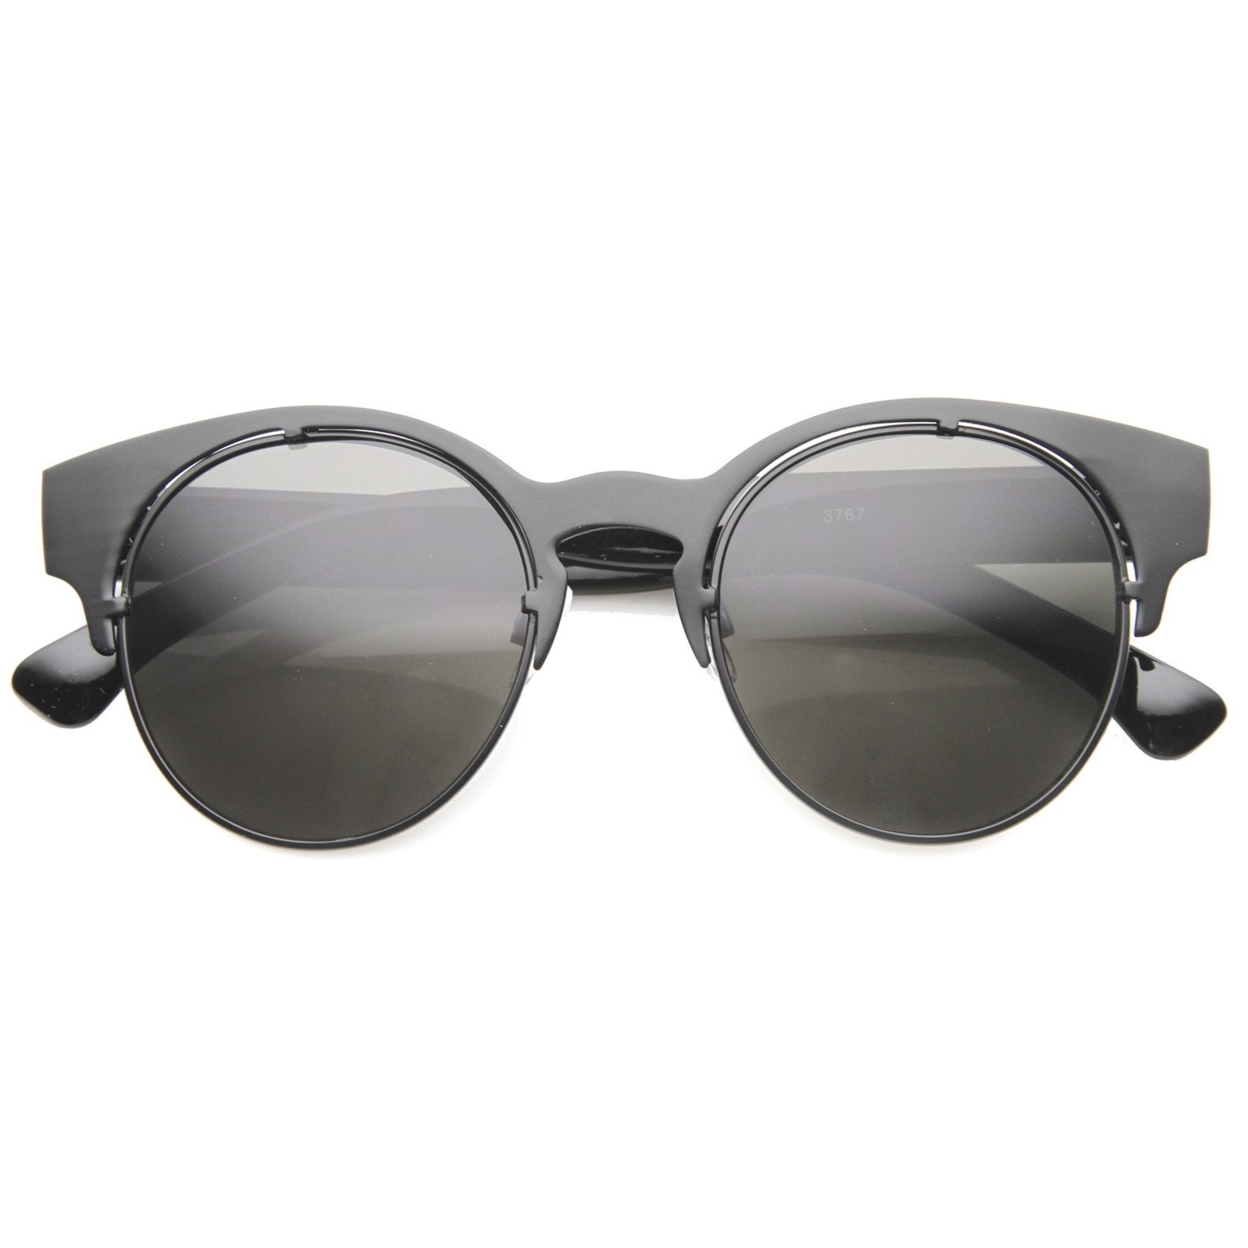 Mens Metal Semi-Rimless Sunglasses With UV400 Protected Composite Lens - Black / Smoke